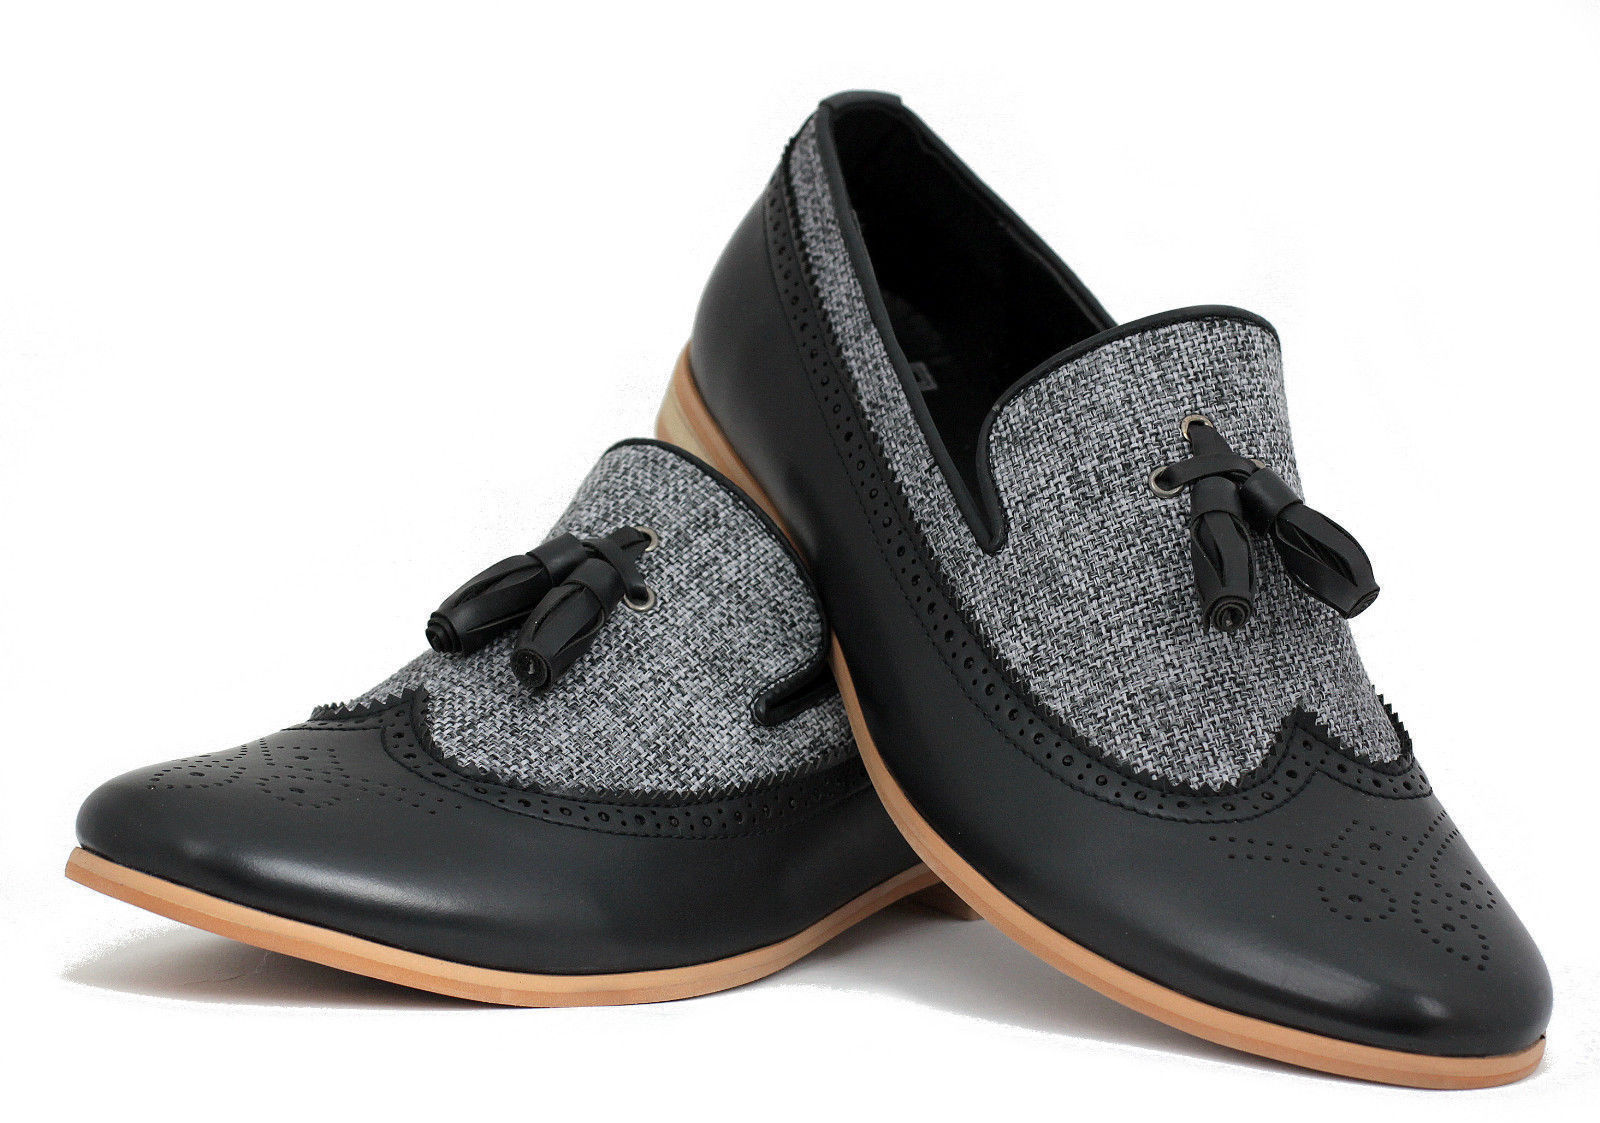 Handmade Men's Genuine Black Leather & Fabric Oxford Brogue Slip On Formal Shoes